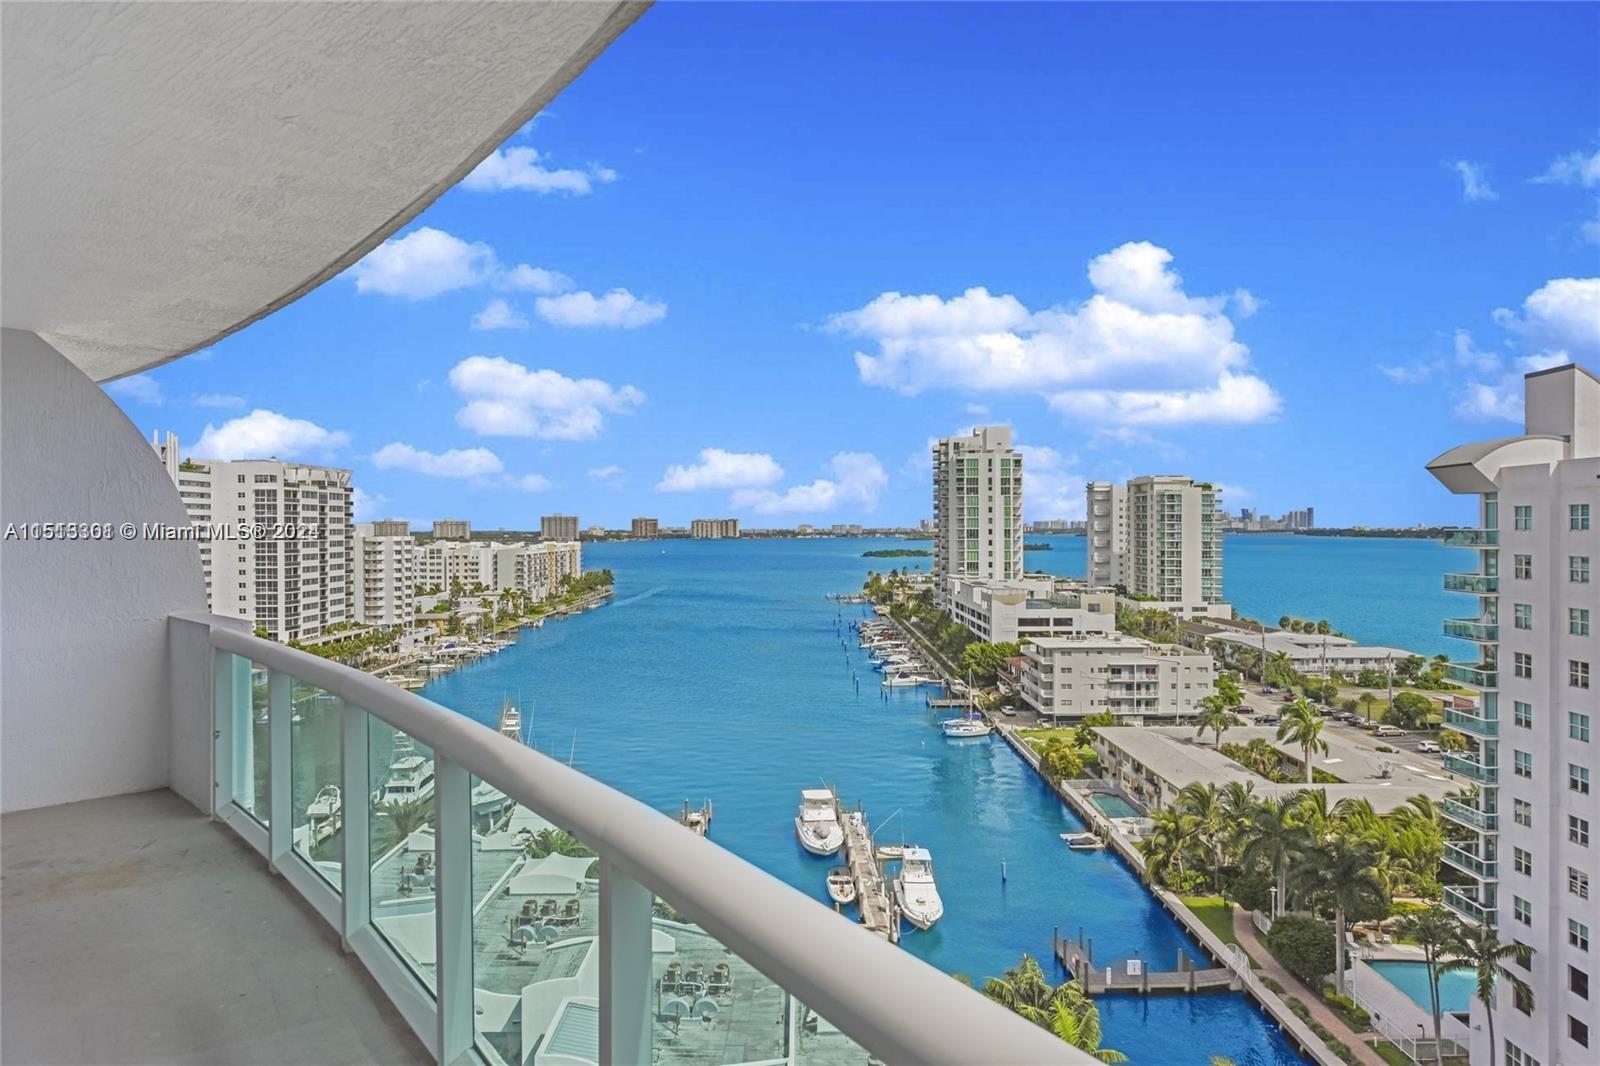 Property for Sale at 7900 Harbor Island Dr 1105, North Bay Village, Miami-Dade County, Florida - Bedrooms: 2 
Bathrooms: 2  - $580,000